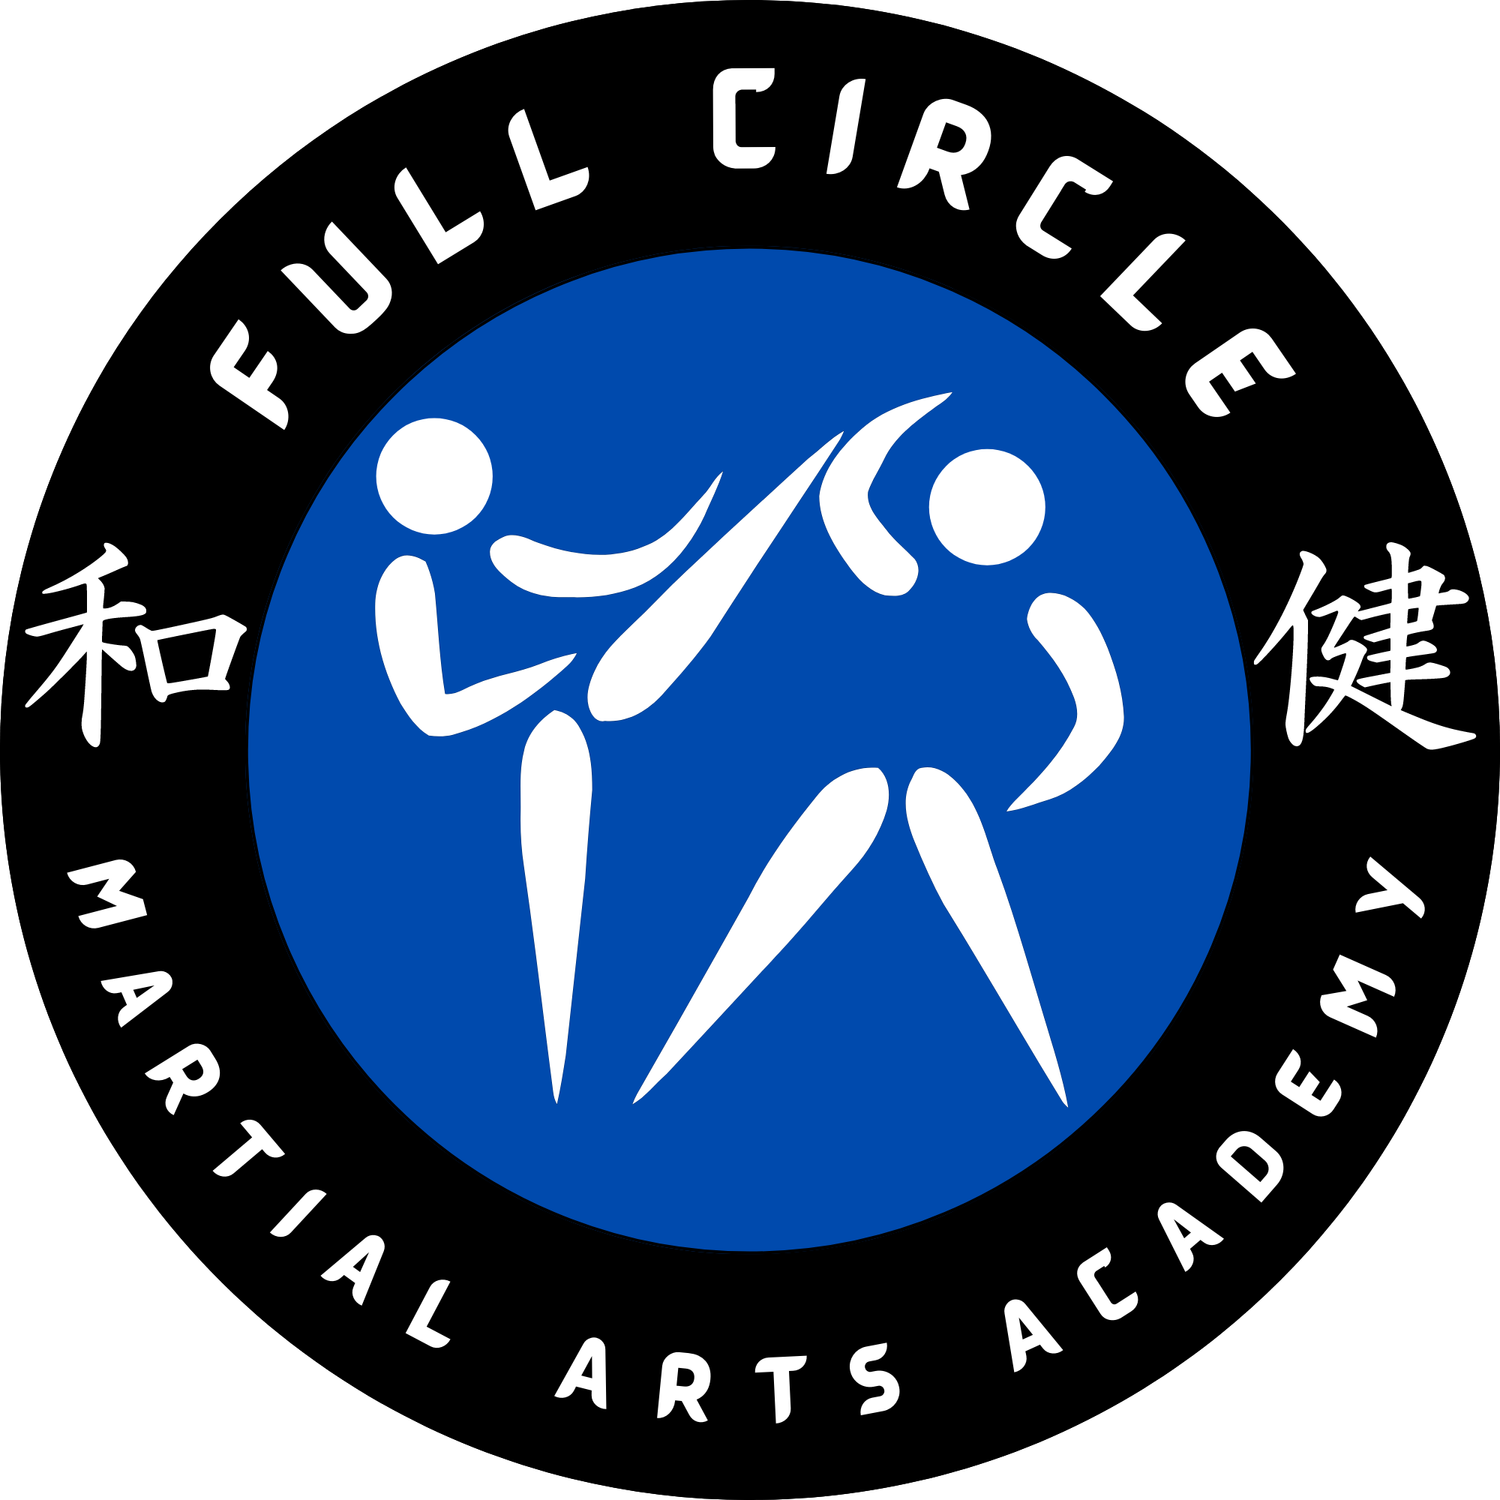 Martial Arts Suffield CT, Self Defense Classes, Kids Karate